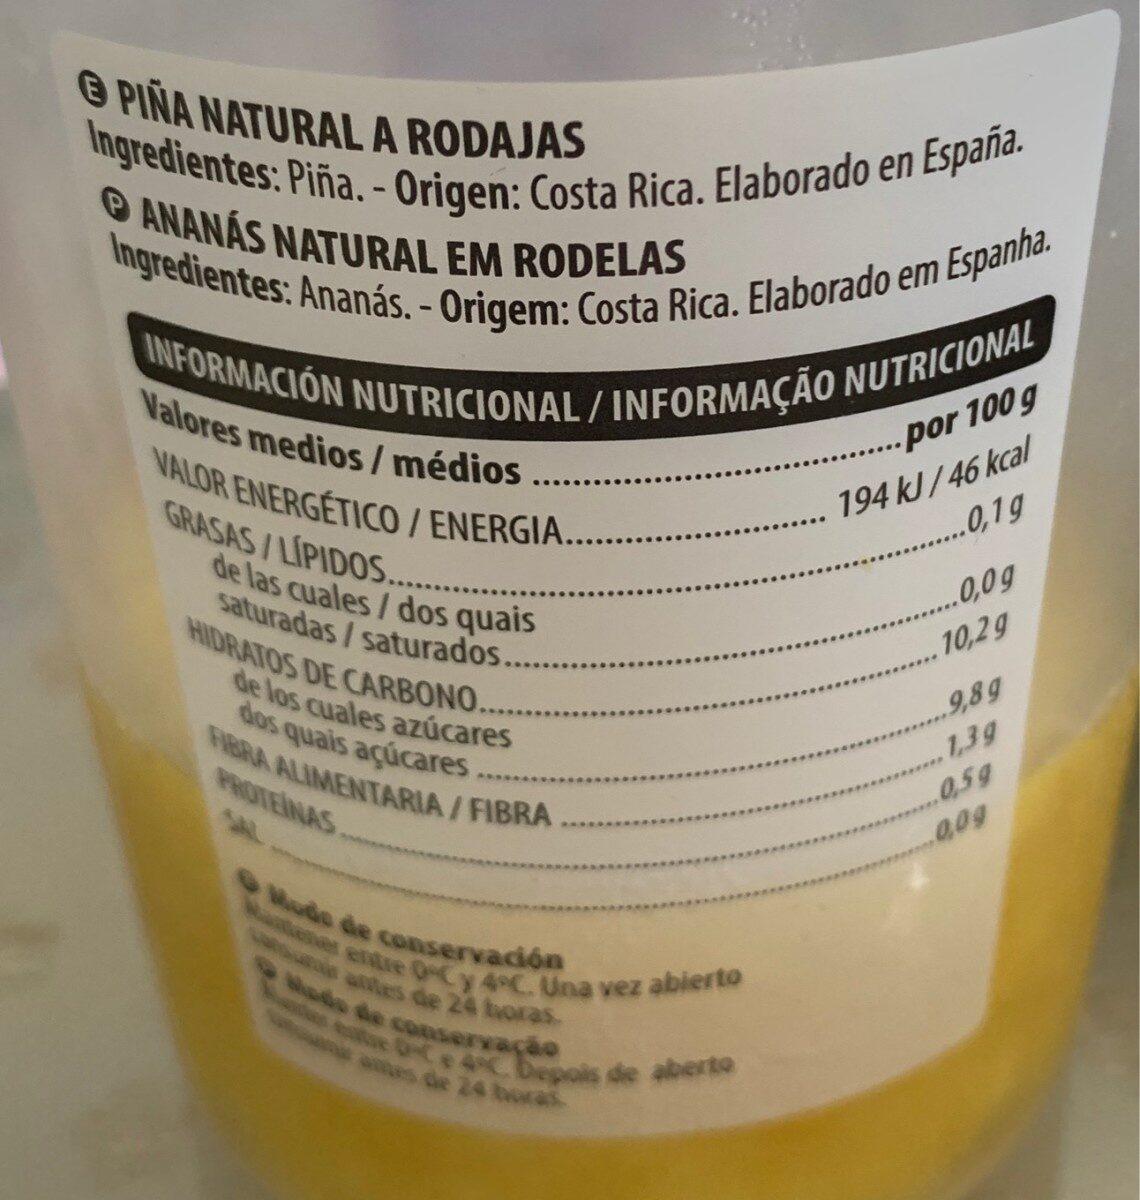 Piña natural a rodajas - Nutrition facts - es